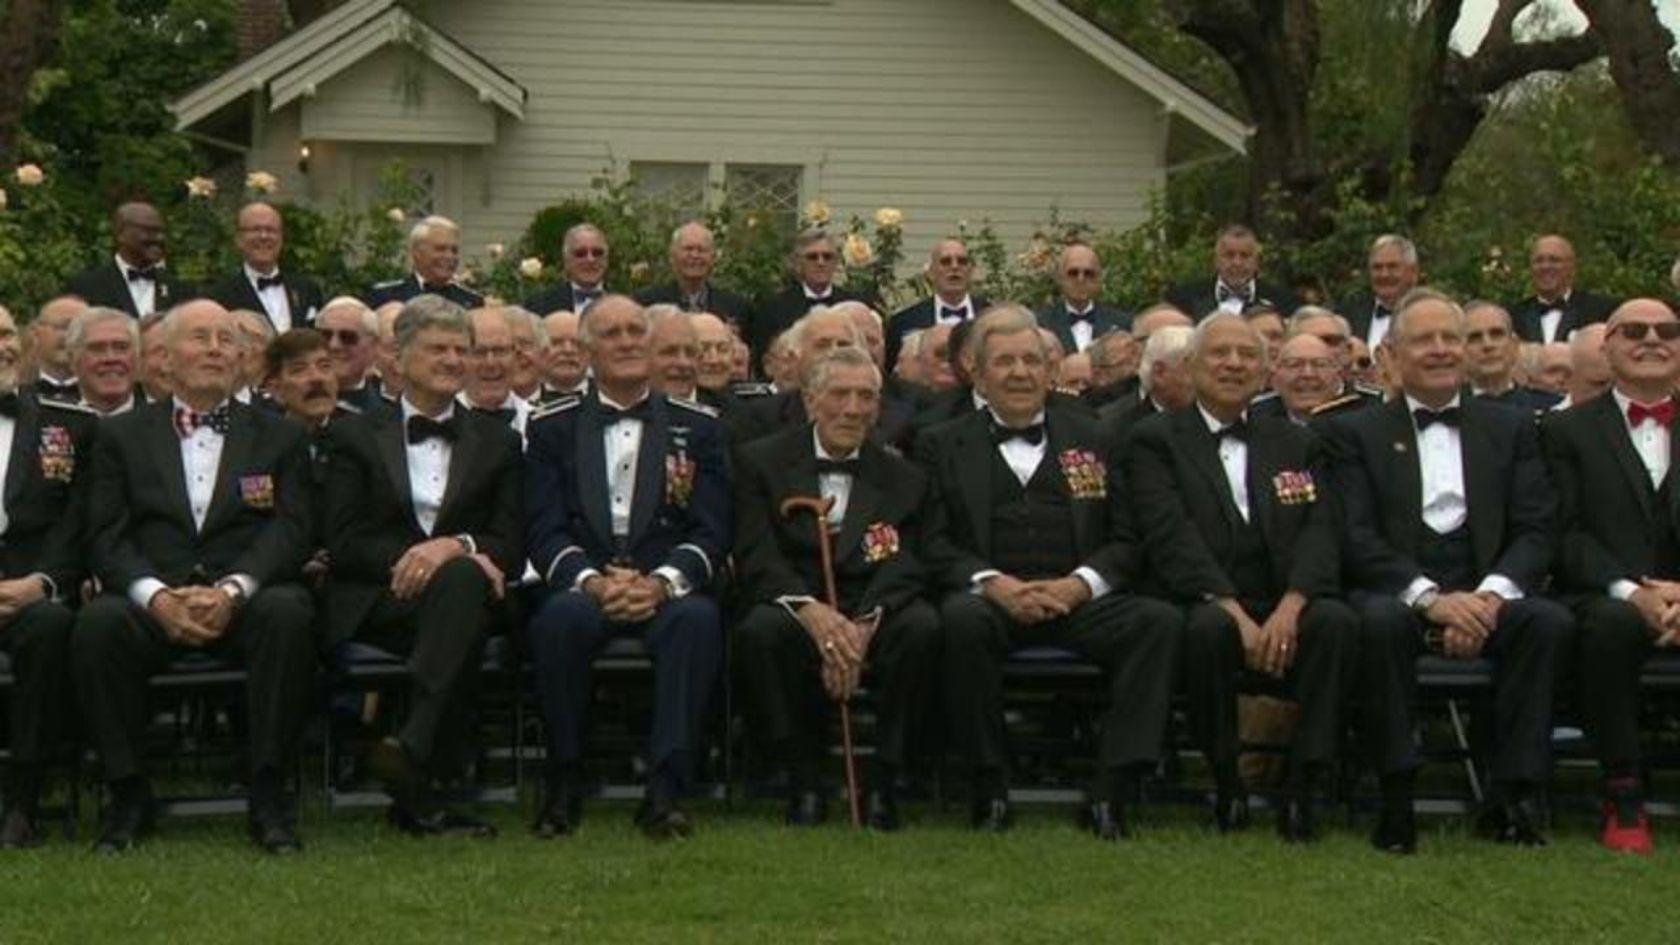 men in uniform sitting on chairs